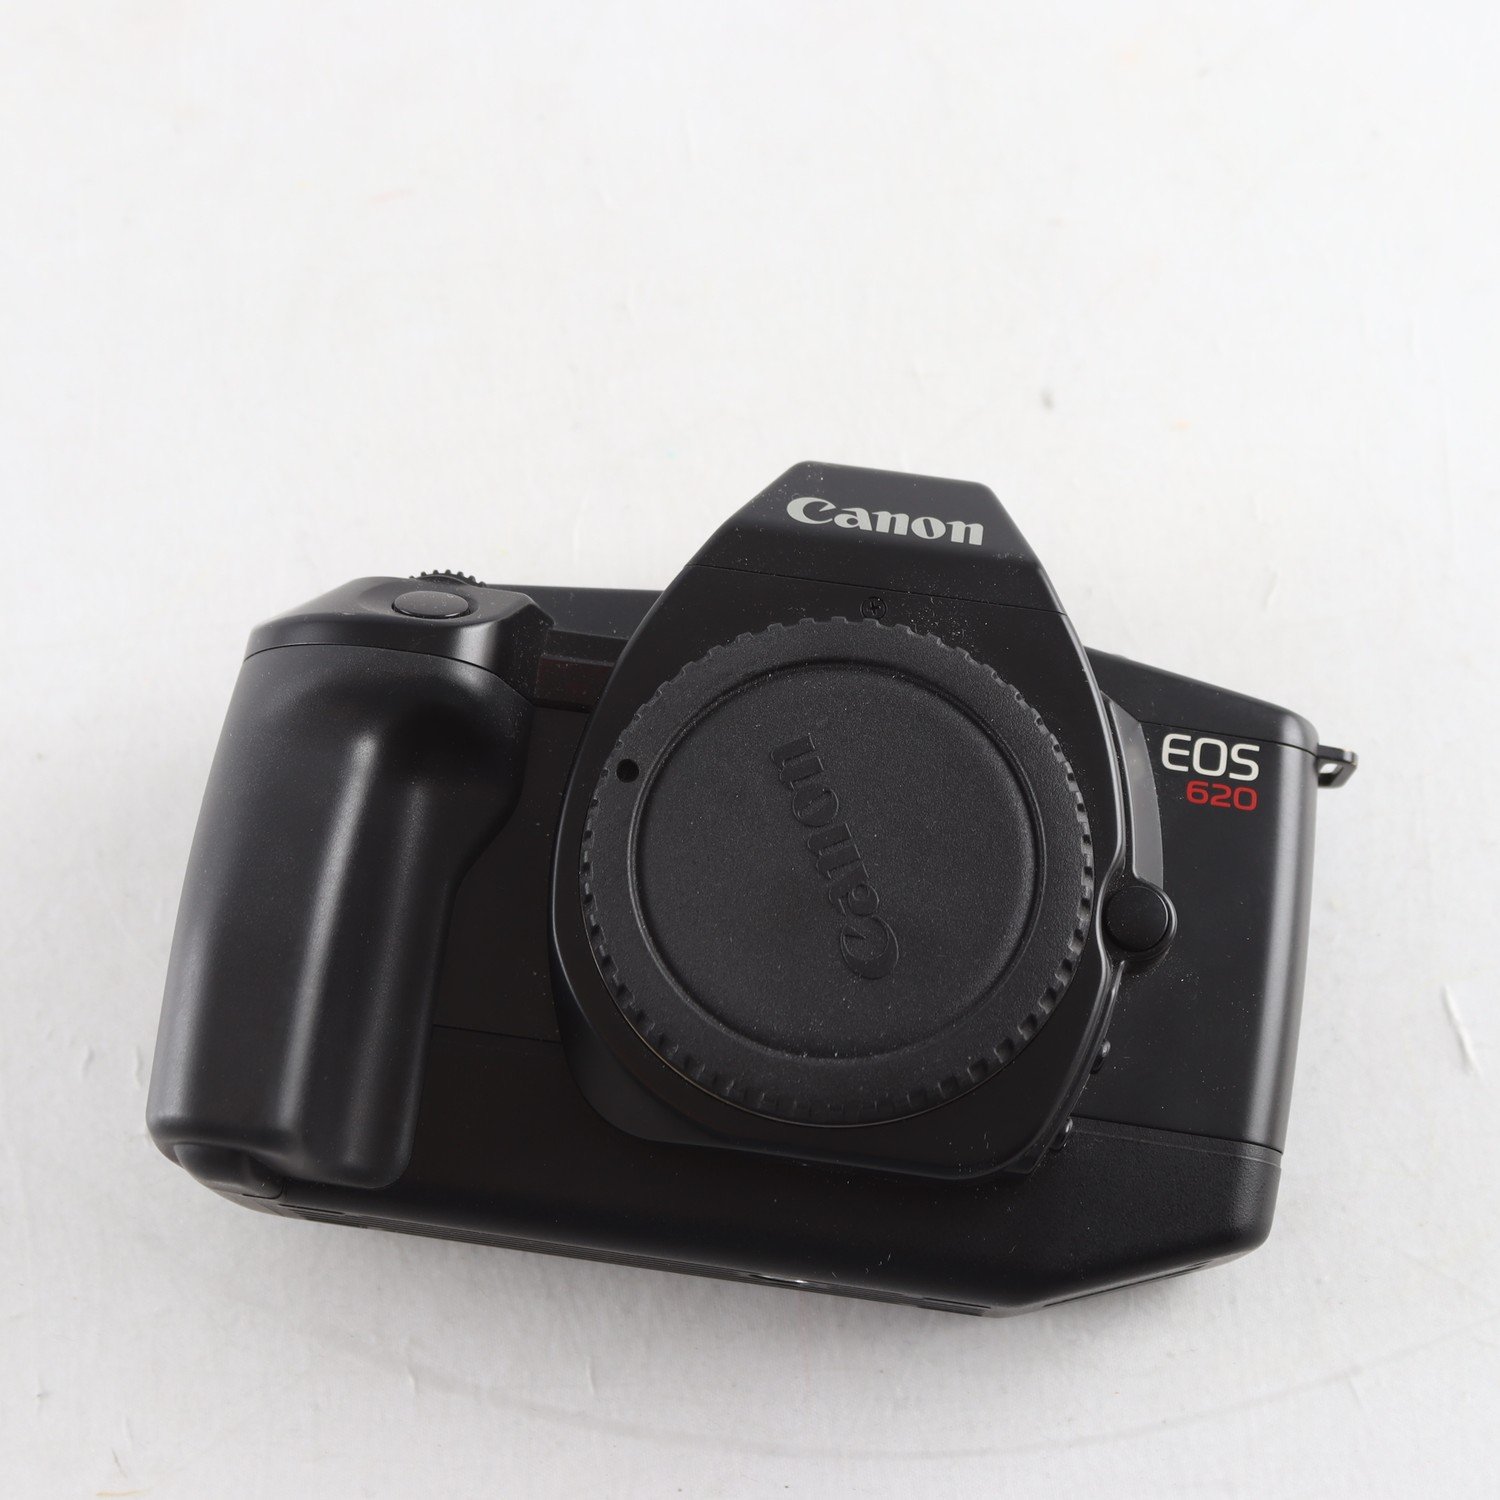 Kamera, Canon 620, eos.